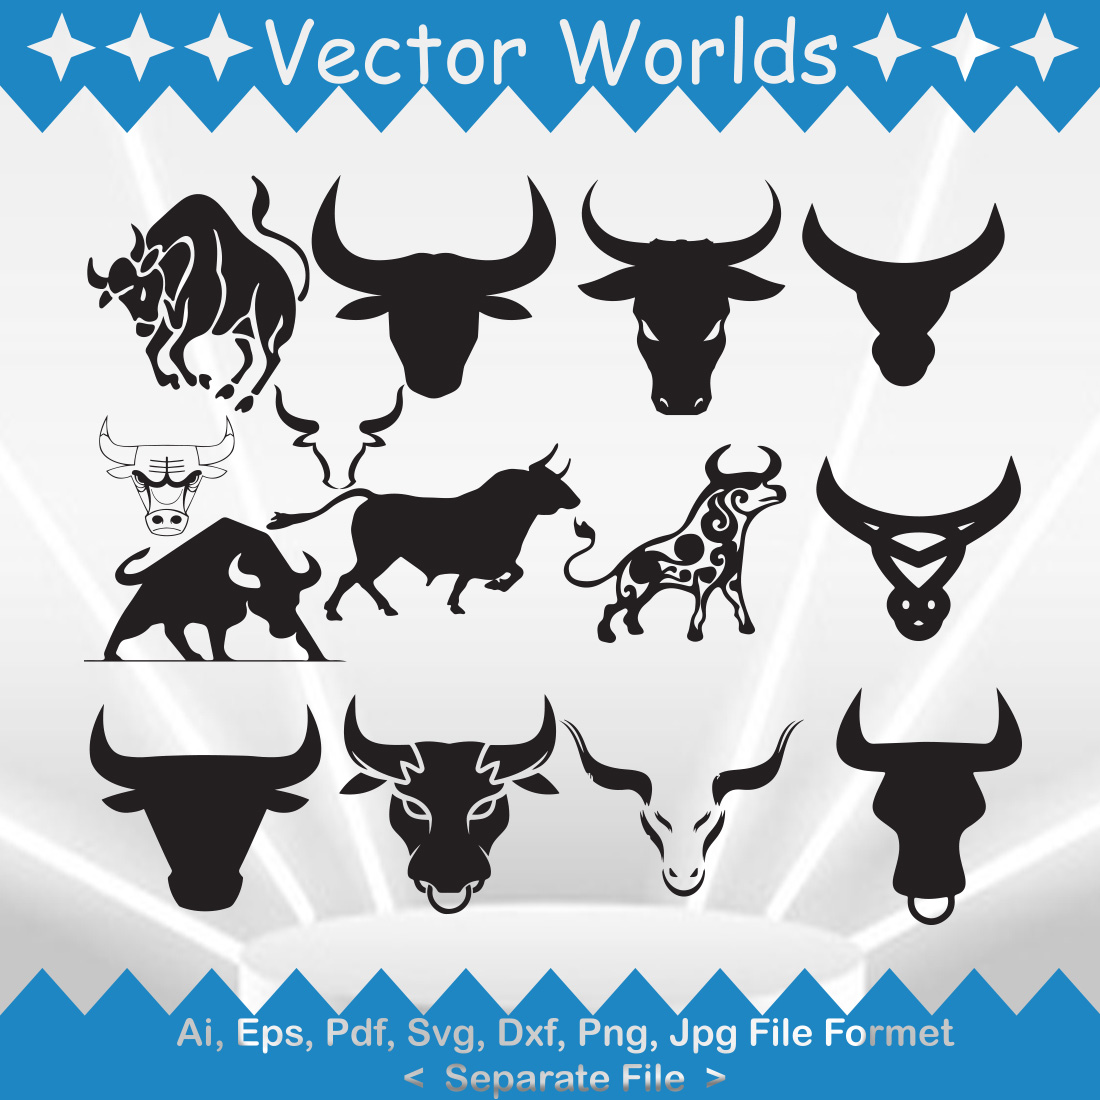 The Bull Symbol SVG Vector Design cover image.